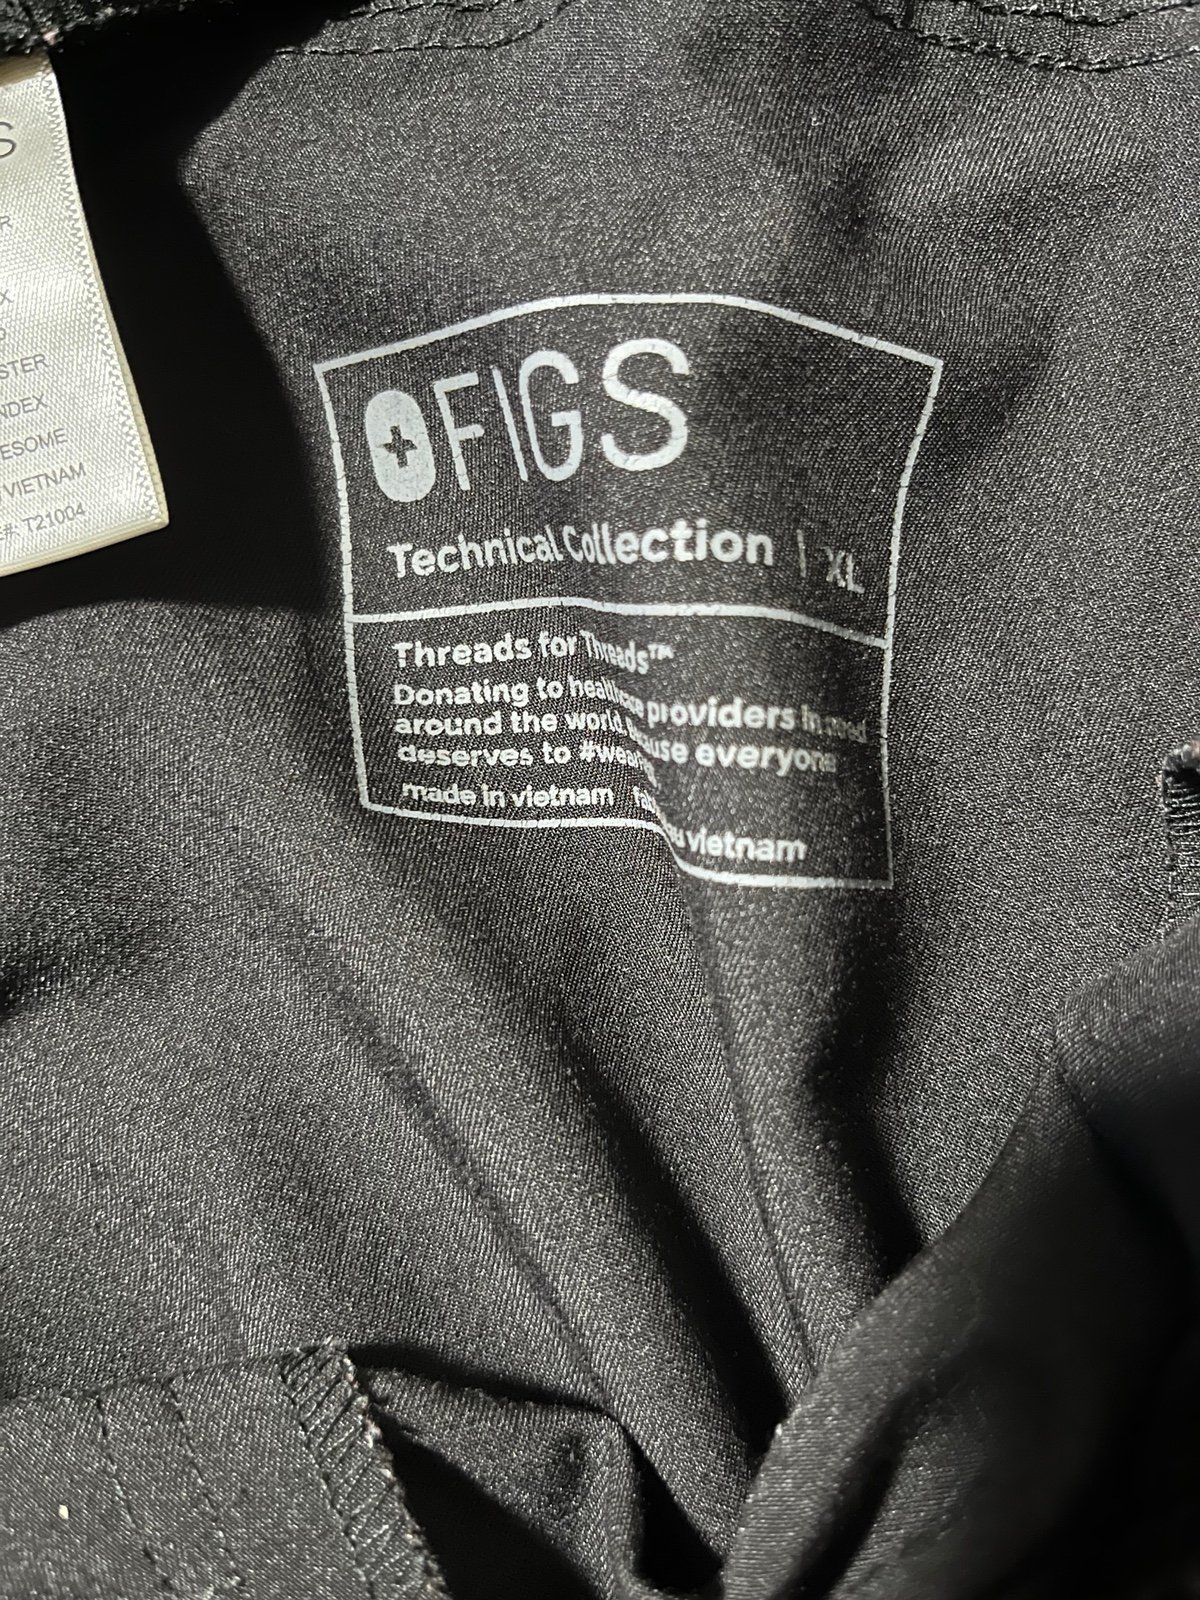 large selection FIG Clothing Kade Cargo Scrub Pants in Black PmD8VjLC4 on sale